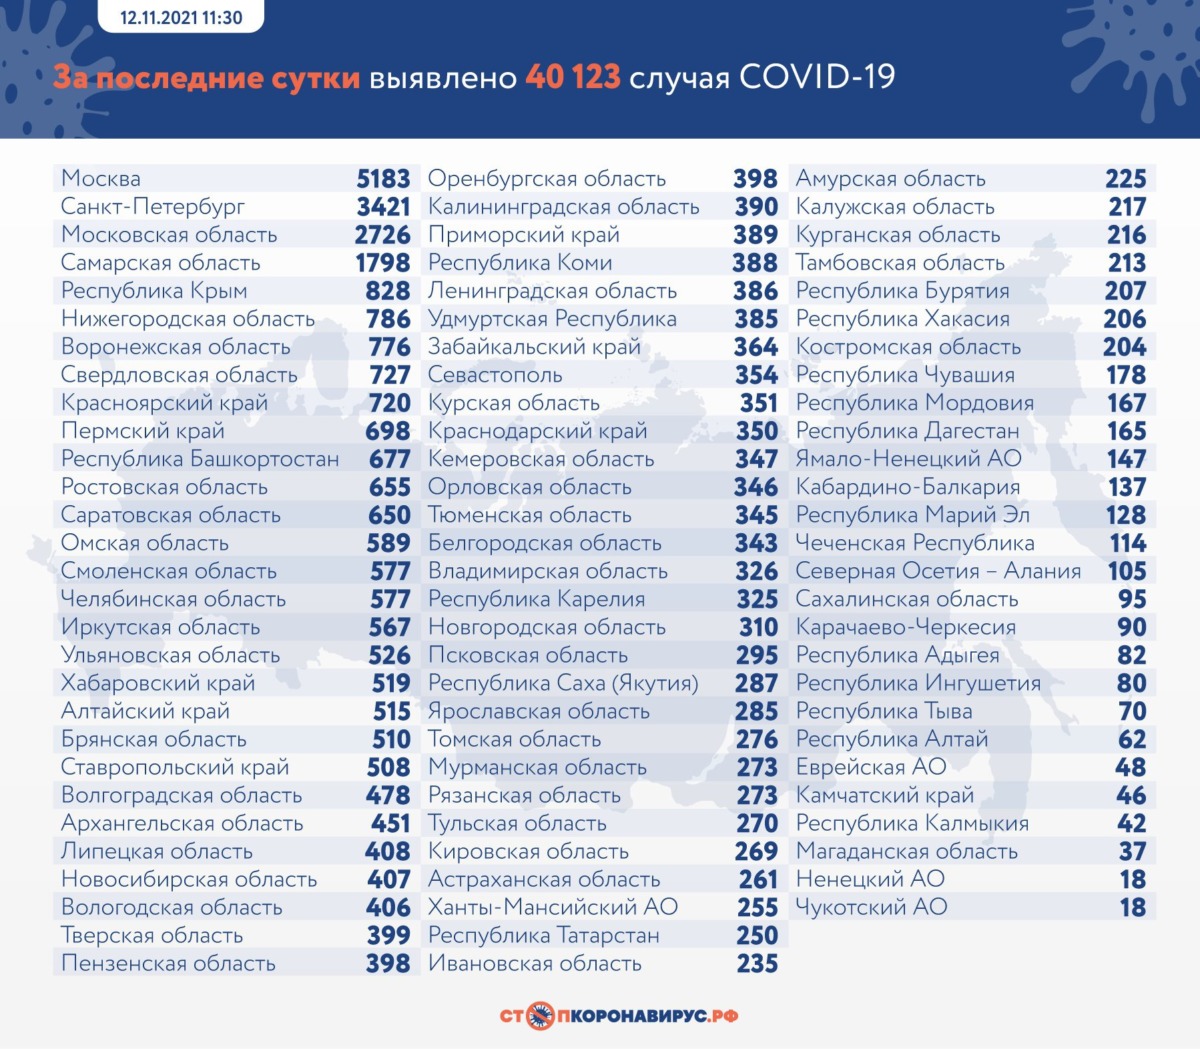 Статистика коронавируса в России на 12 ноября